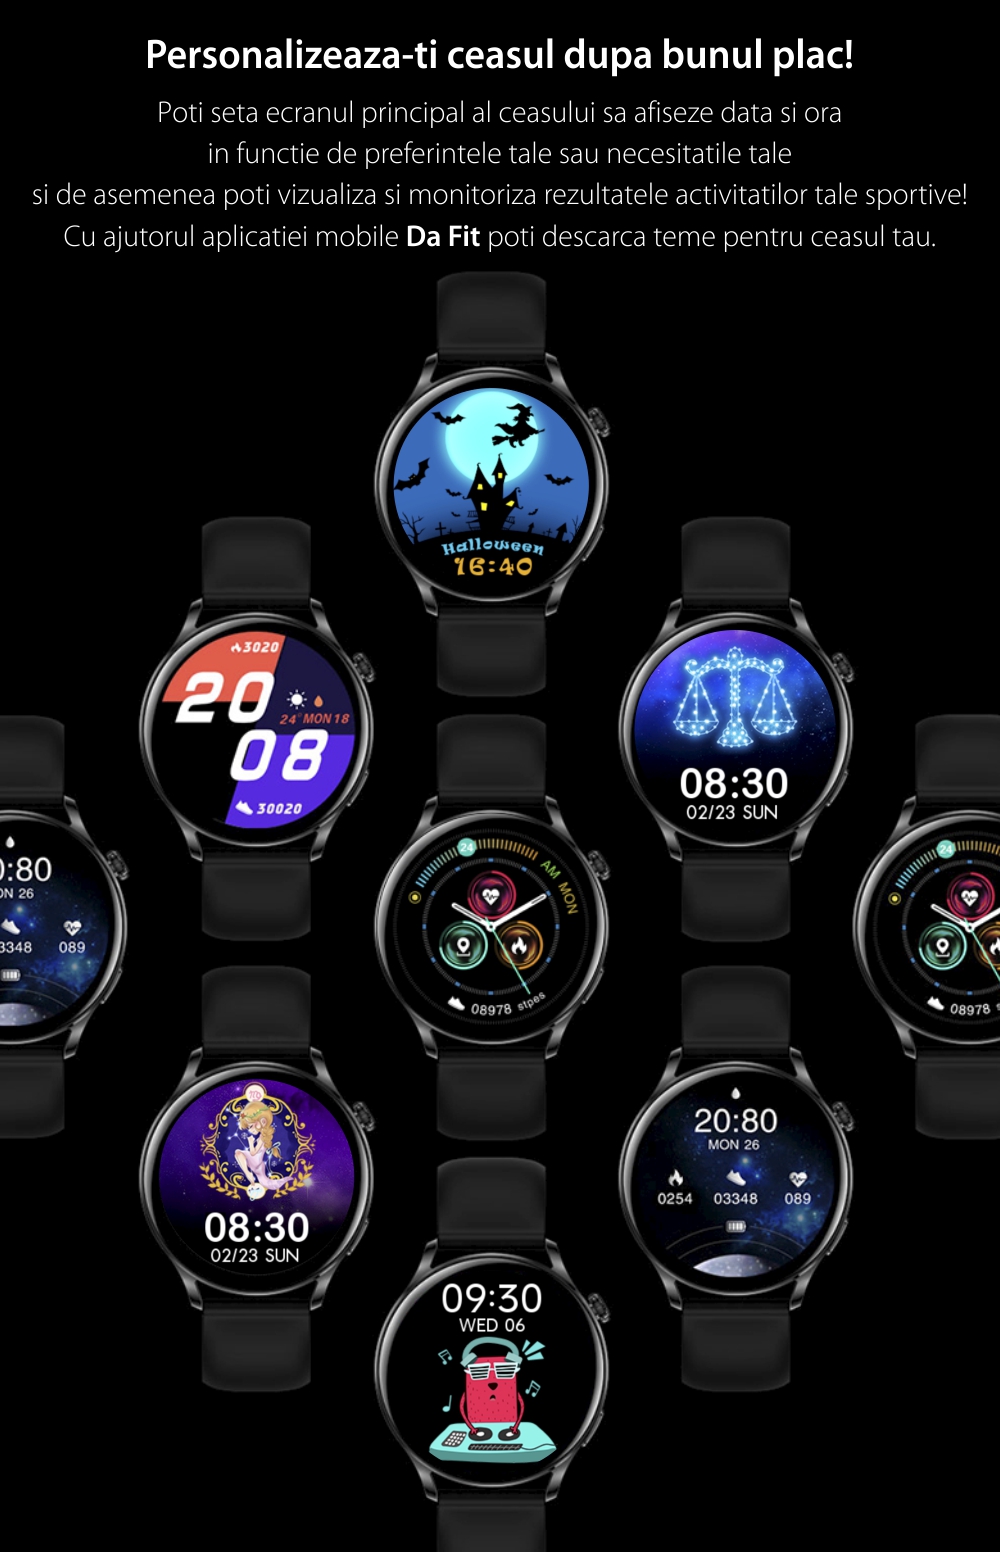 Ceas Smartwatch XK Fitness AK37 cu Functii monitorizare sanatate, Notificari, Bluetooth, Cronometru, Bratara metalica, Negru